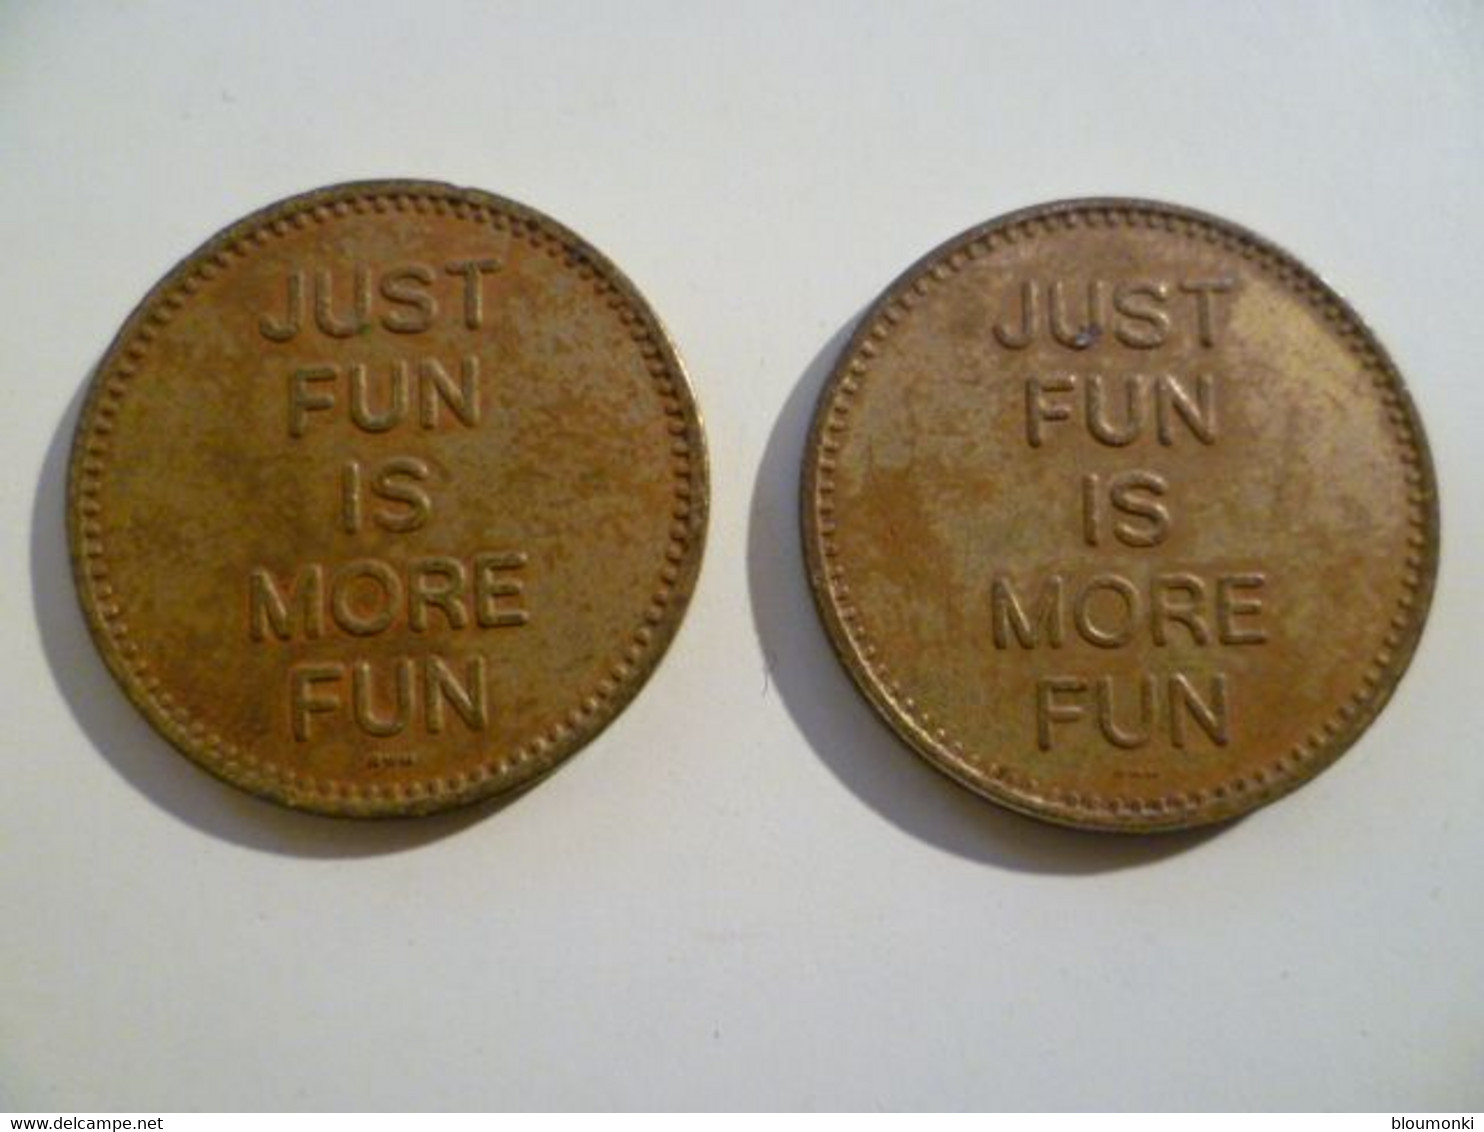 2 Jetons Etats Unis / USA Coins / ACRA No Cash Value Just Fun Is More Fun - Professionali/Di Società